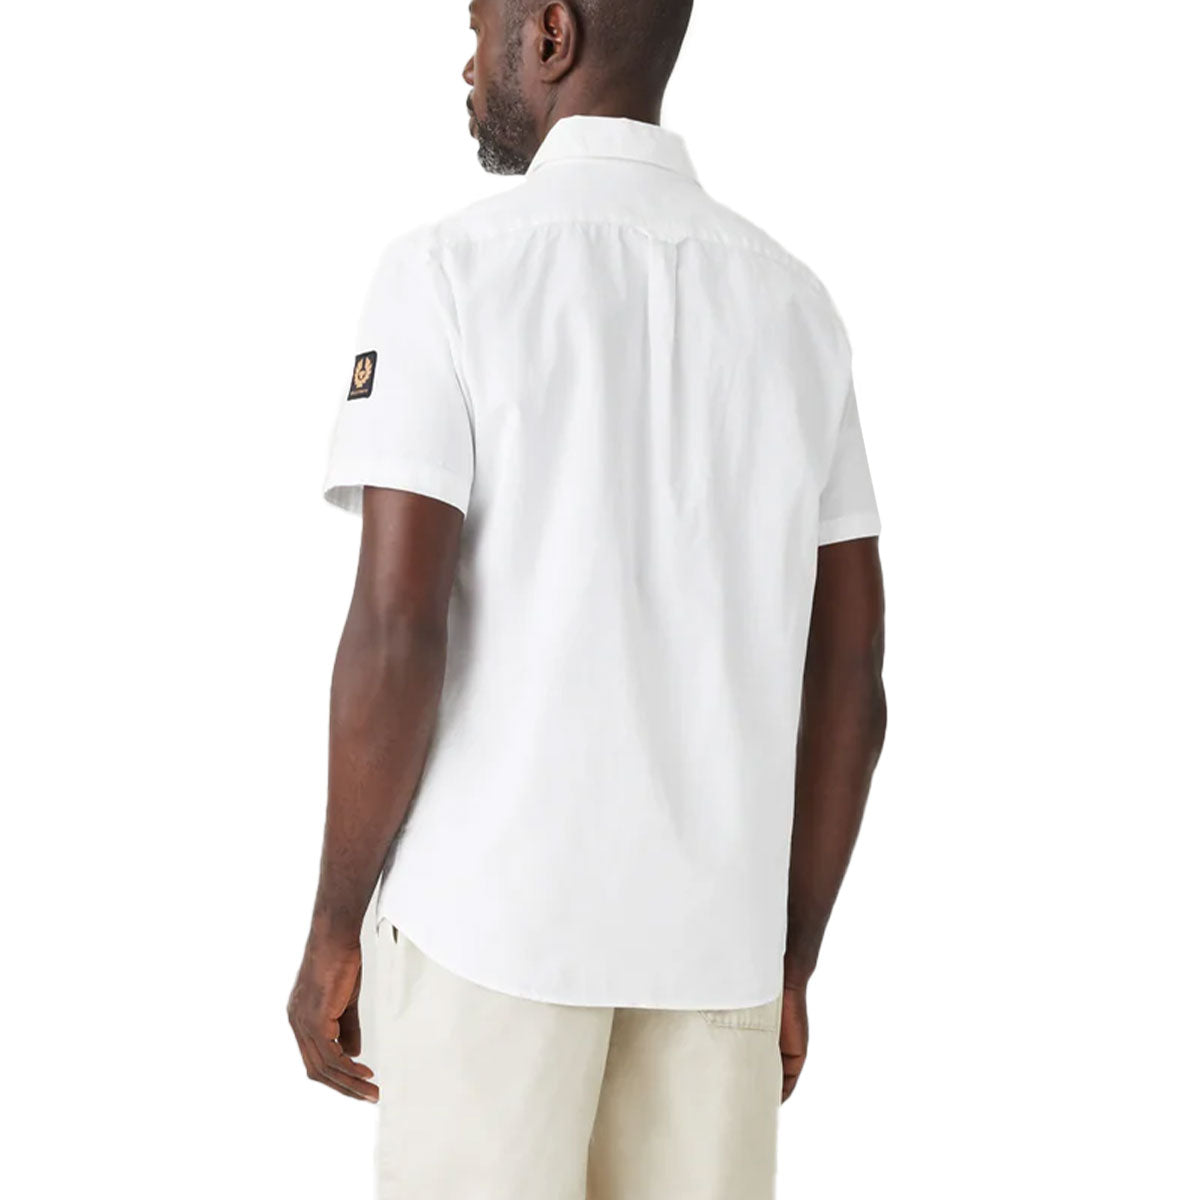 Scale White Short Sleeve Shirt Short Sleeve Belstaff   